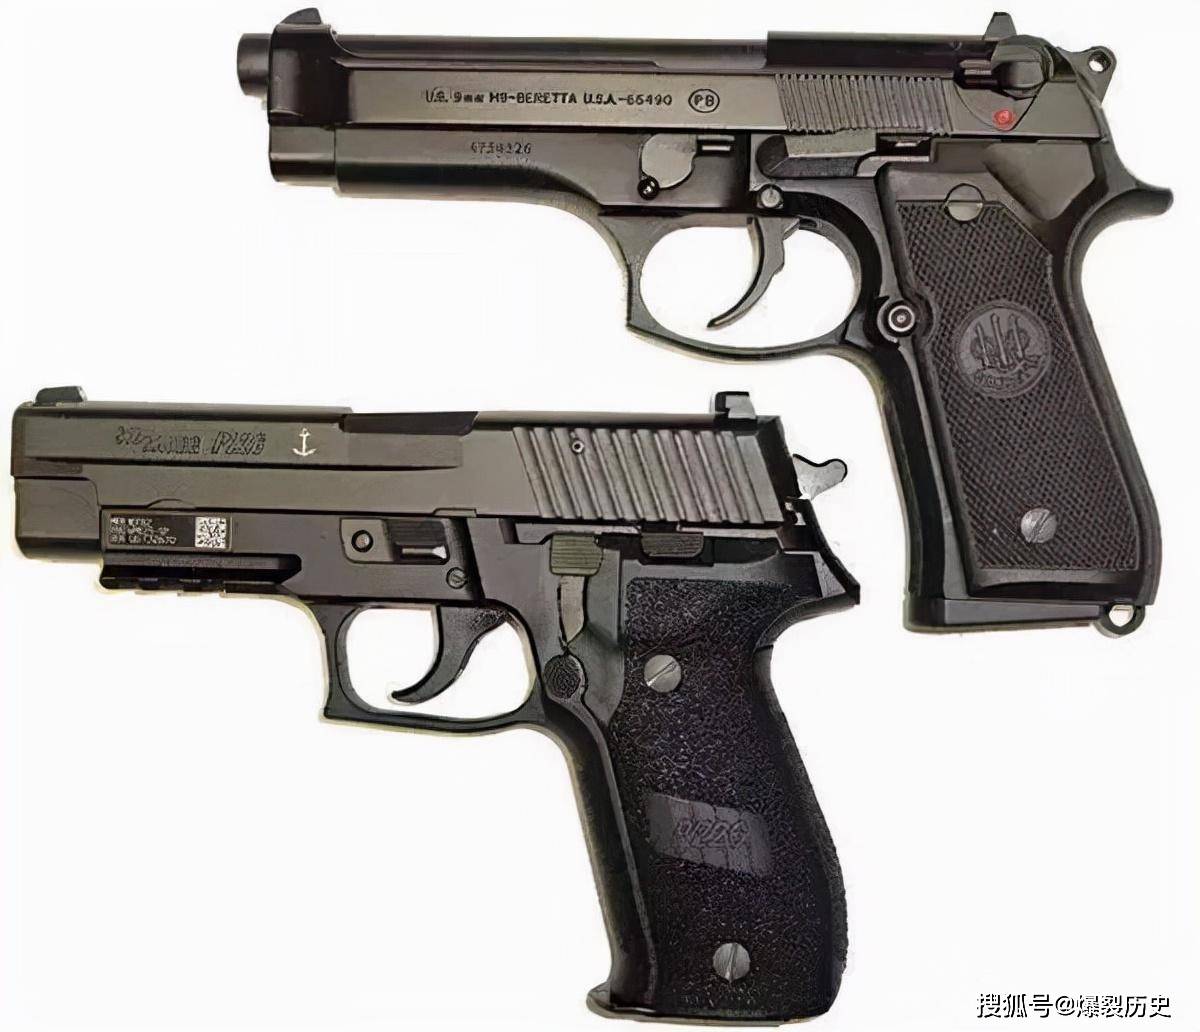 m11(西格绍尔p228)是p226手枪的紧凑版本,虽然比较昂贵,但是方便携带